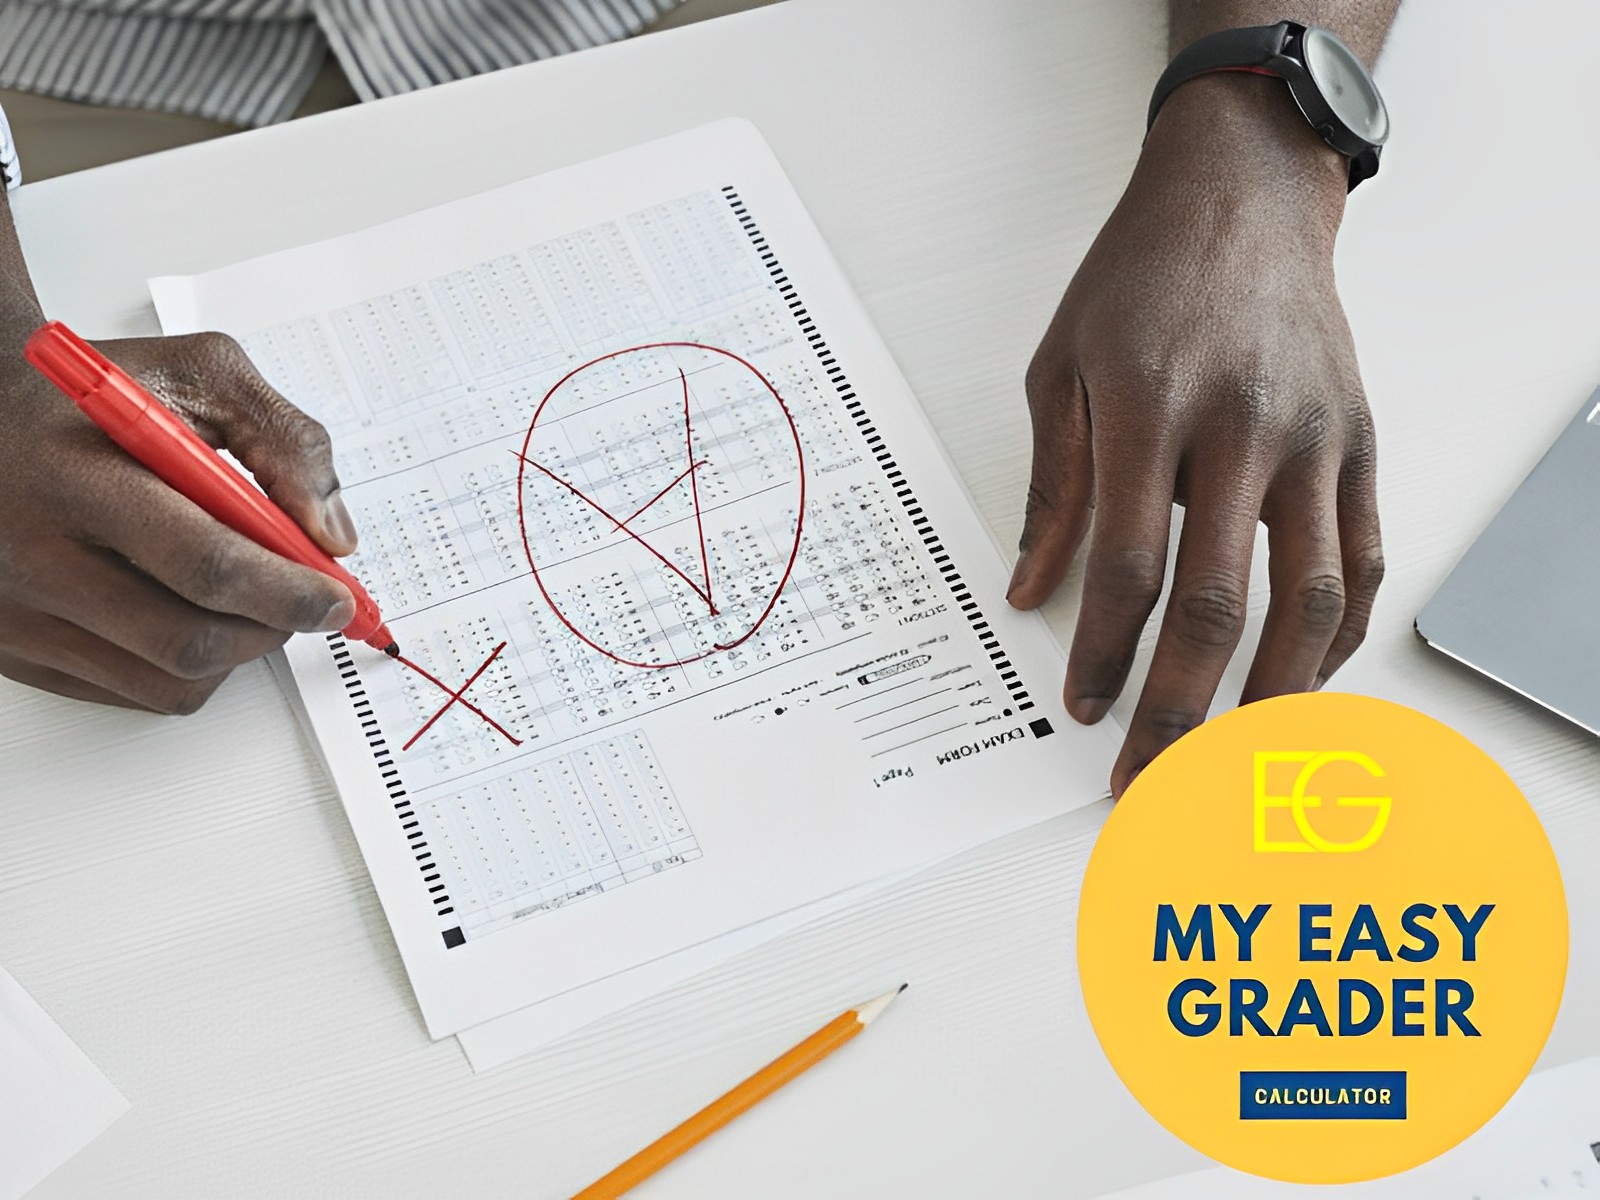 My Easy Grader Calculator for Grading Exams – Best Grading App